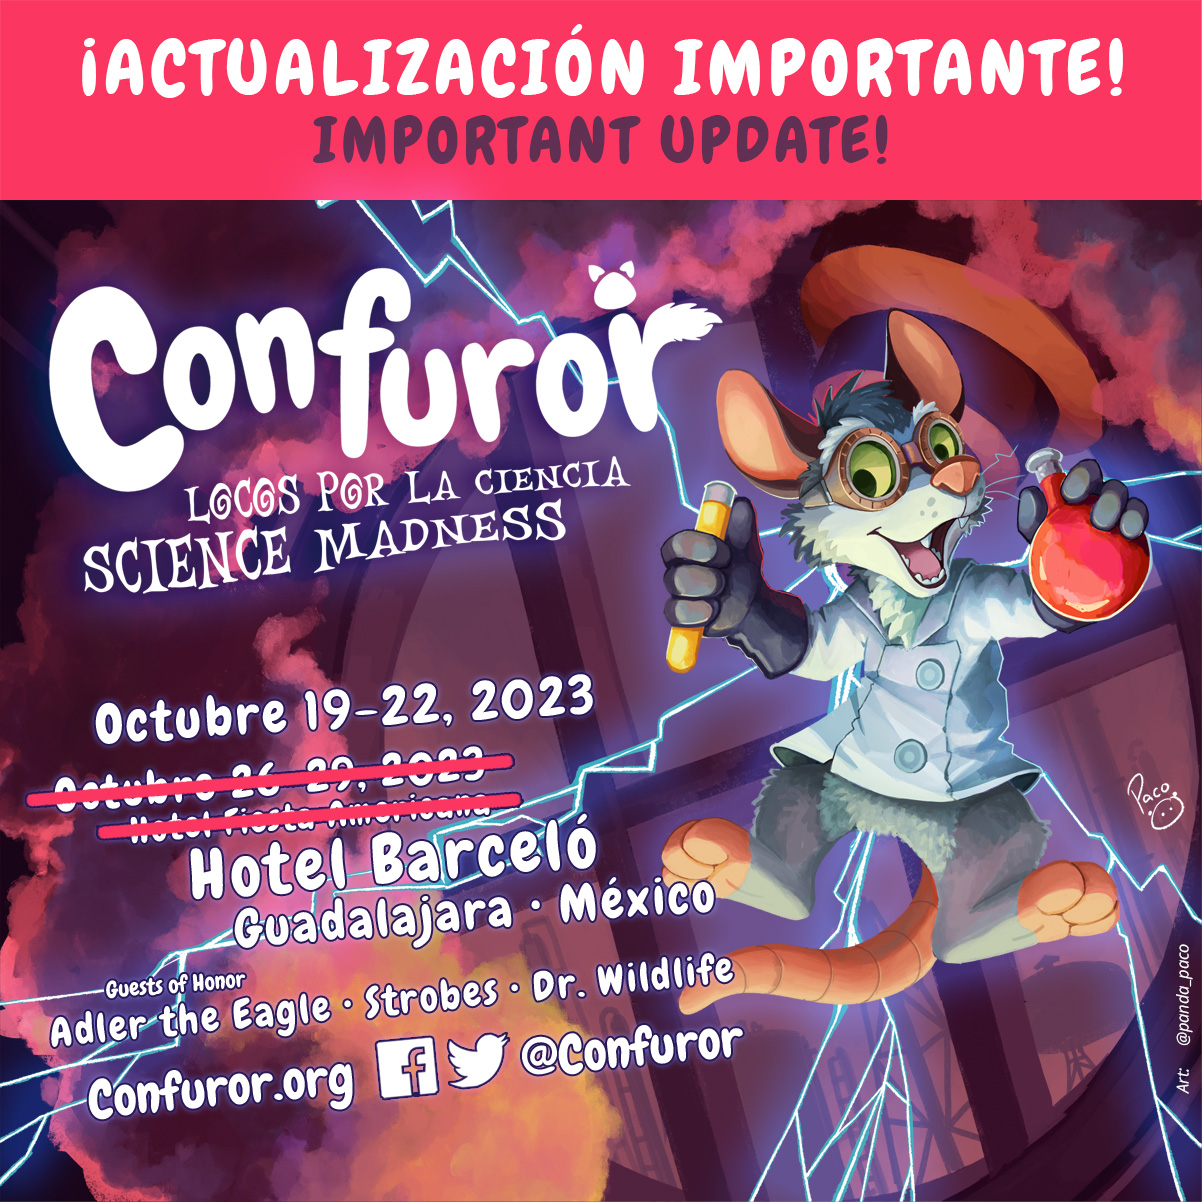 New Venue and Dates: October 19 to 22, 2023; Hotel Barceló Guadalajara